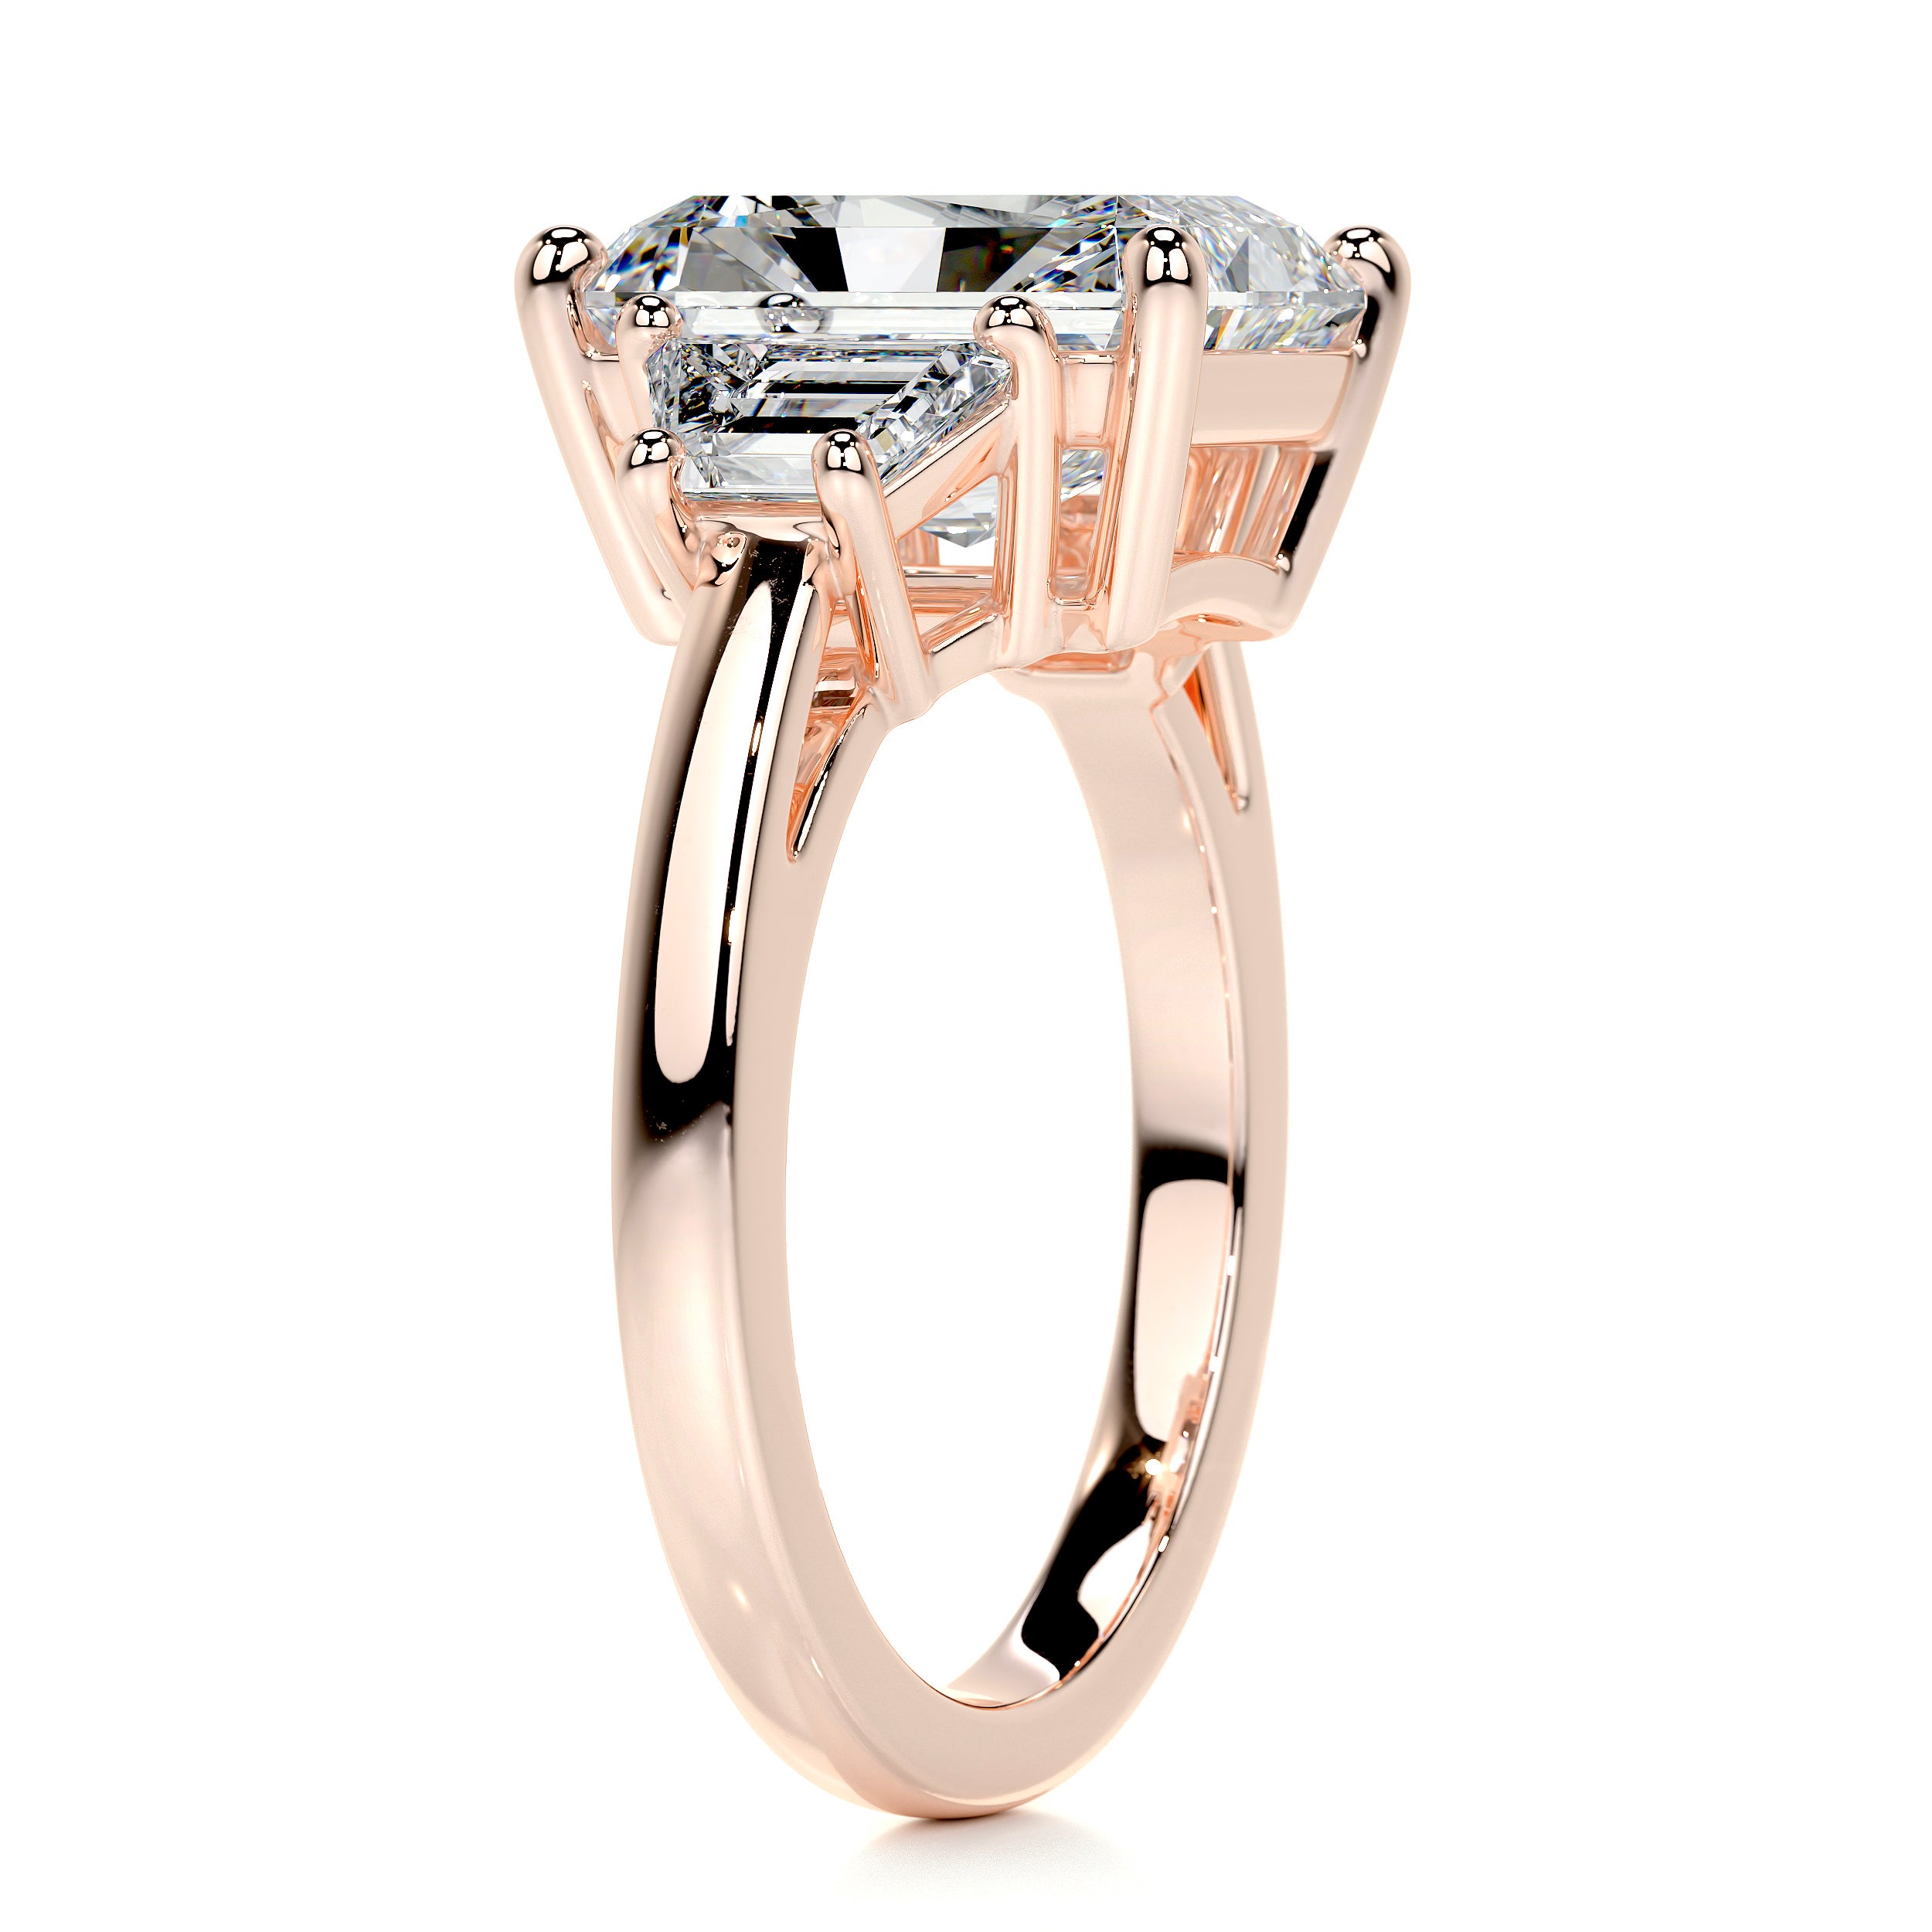 Skylar Diamond Engagement Ring   (3.5 Carat) -14K Rose Gold